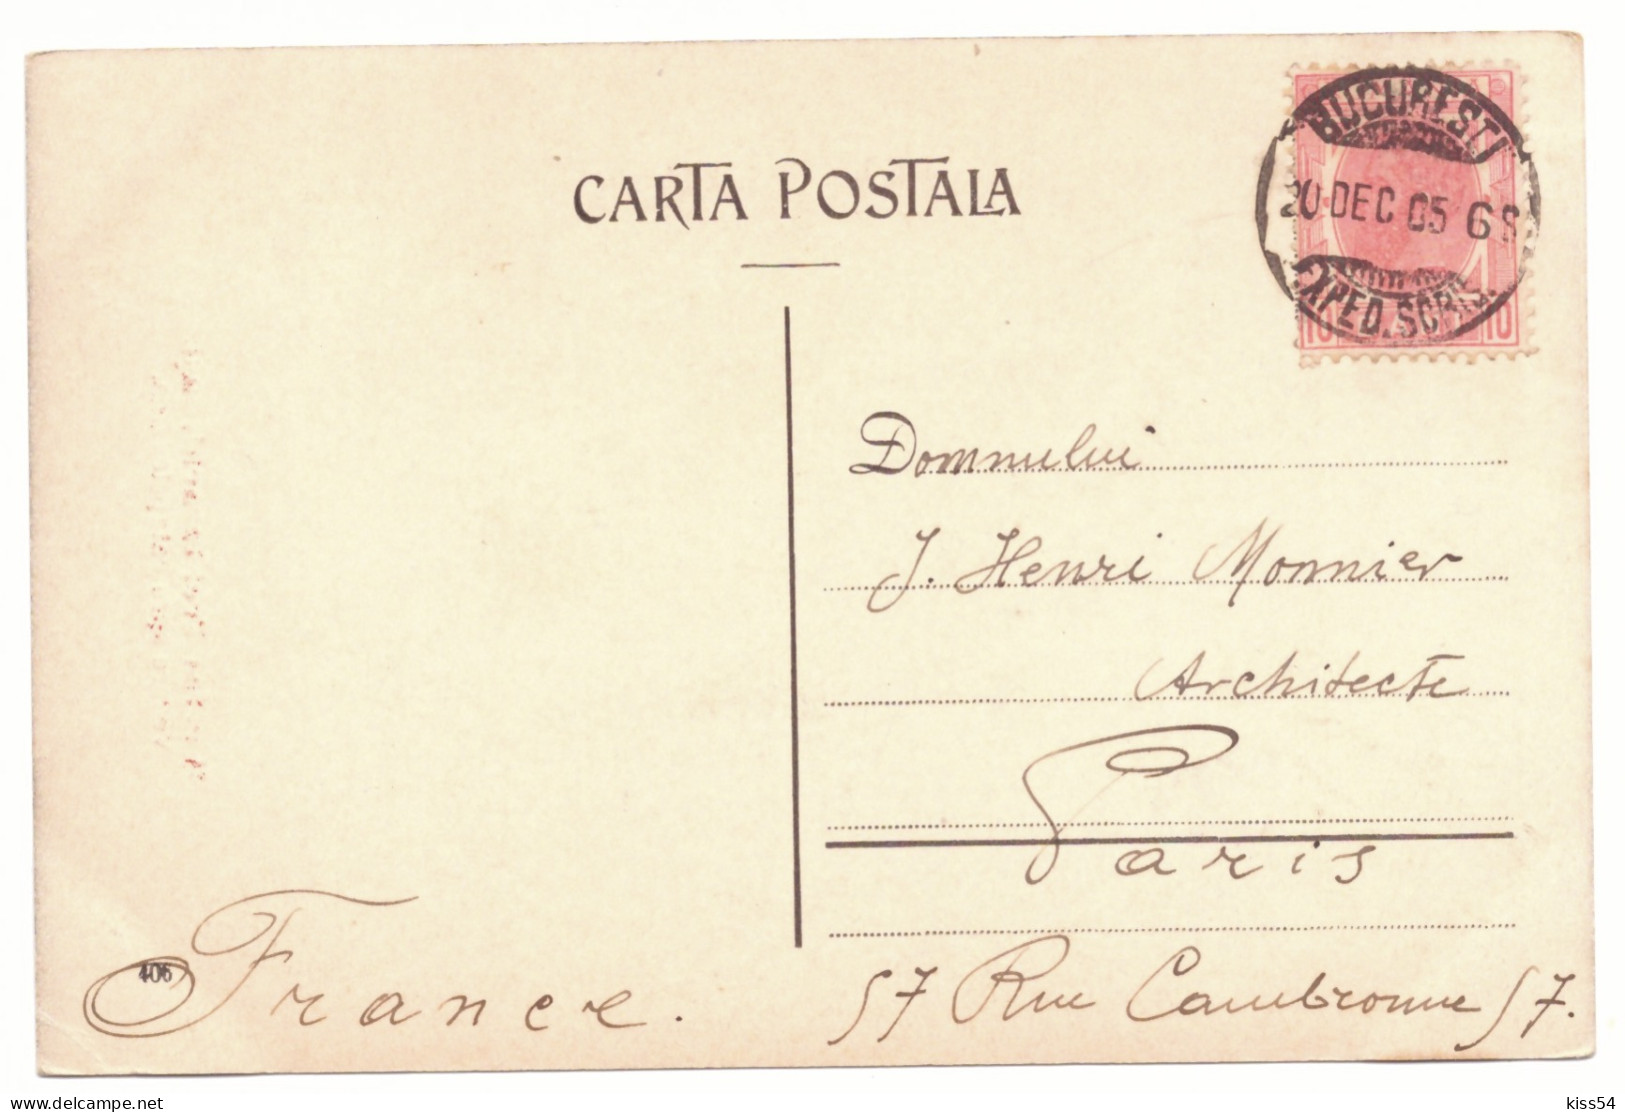 RO 09 - 21078 IASI, The Church Of TREI IERARHI, Interior, Romania - Old Postcard - Used - 1905 - Roemenië